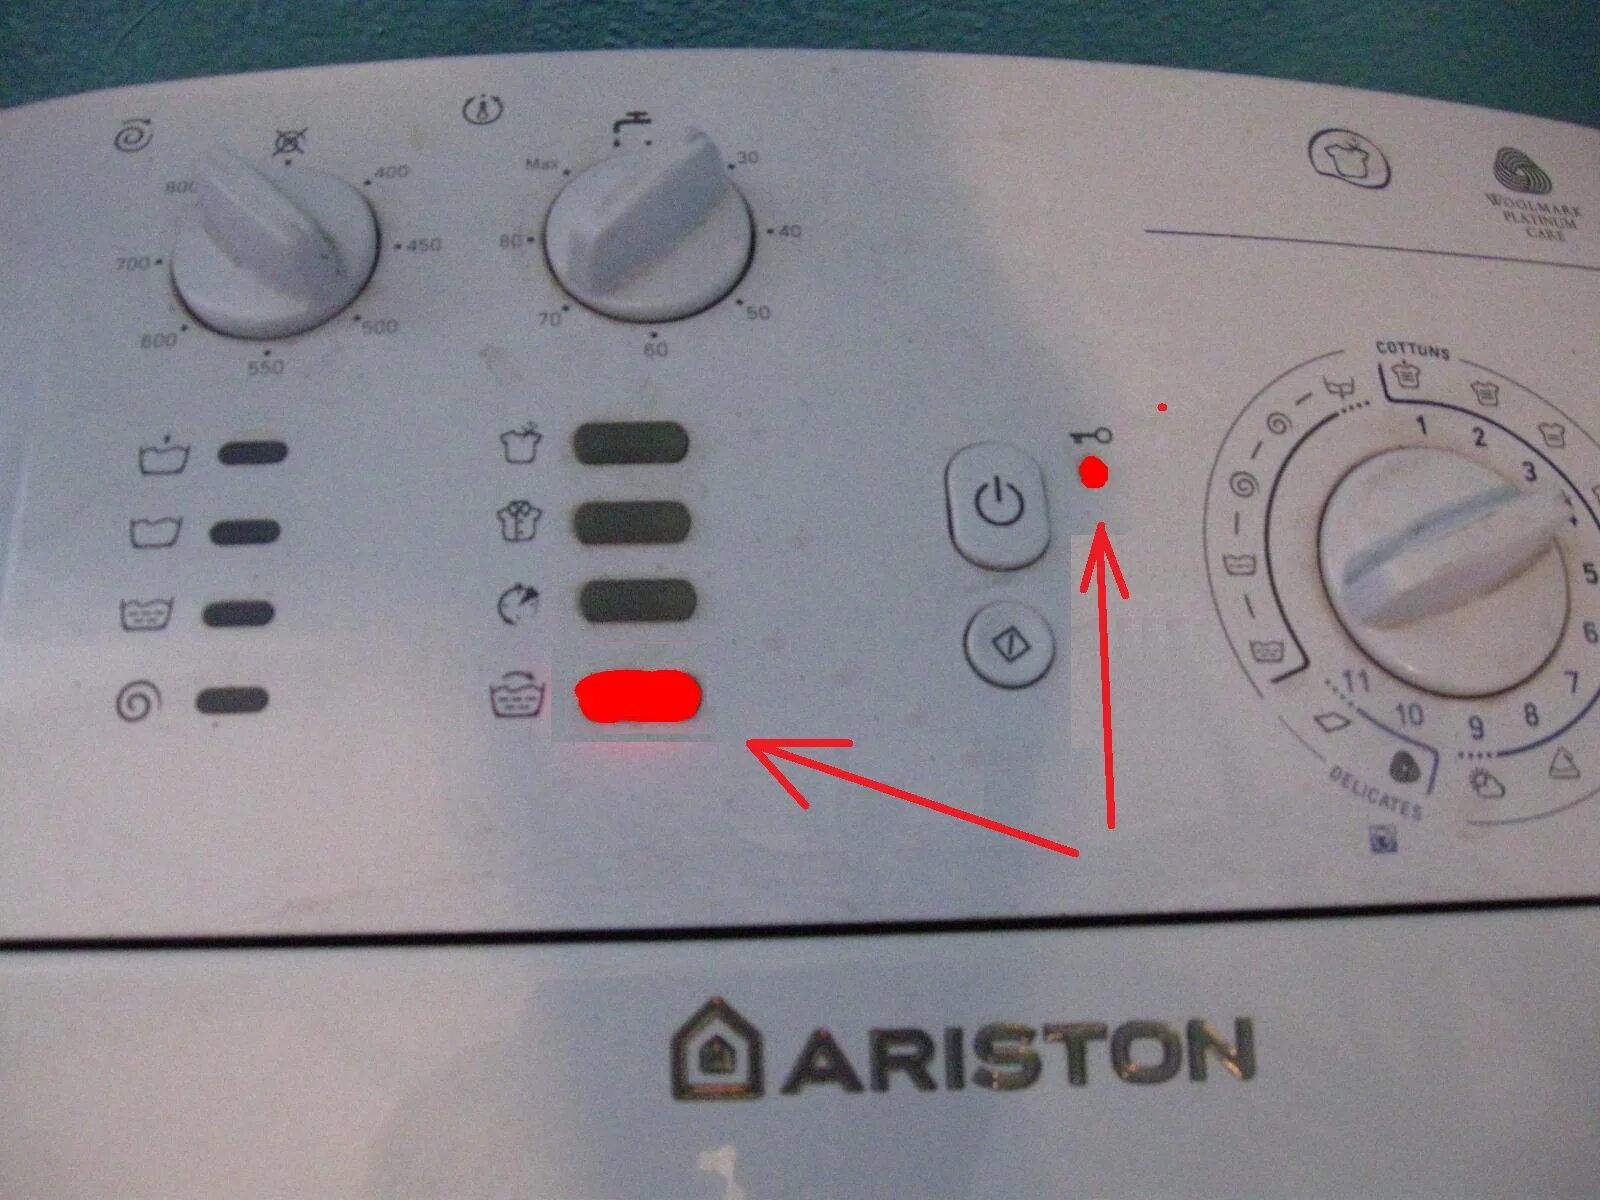 Hotpoint ariston вертикальная загрузка. Стиральная машина Ariston AVTL 104. Стиральная машинка Аристон AVTL 83. Hotpoint Ariston стиральная AVTL 104. Коды ошибок стиральной машины Аристон AVTL 104.